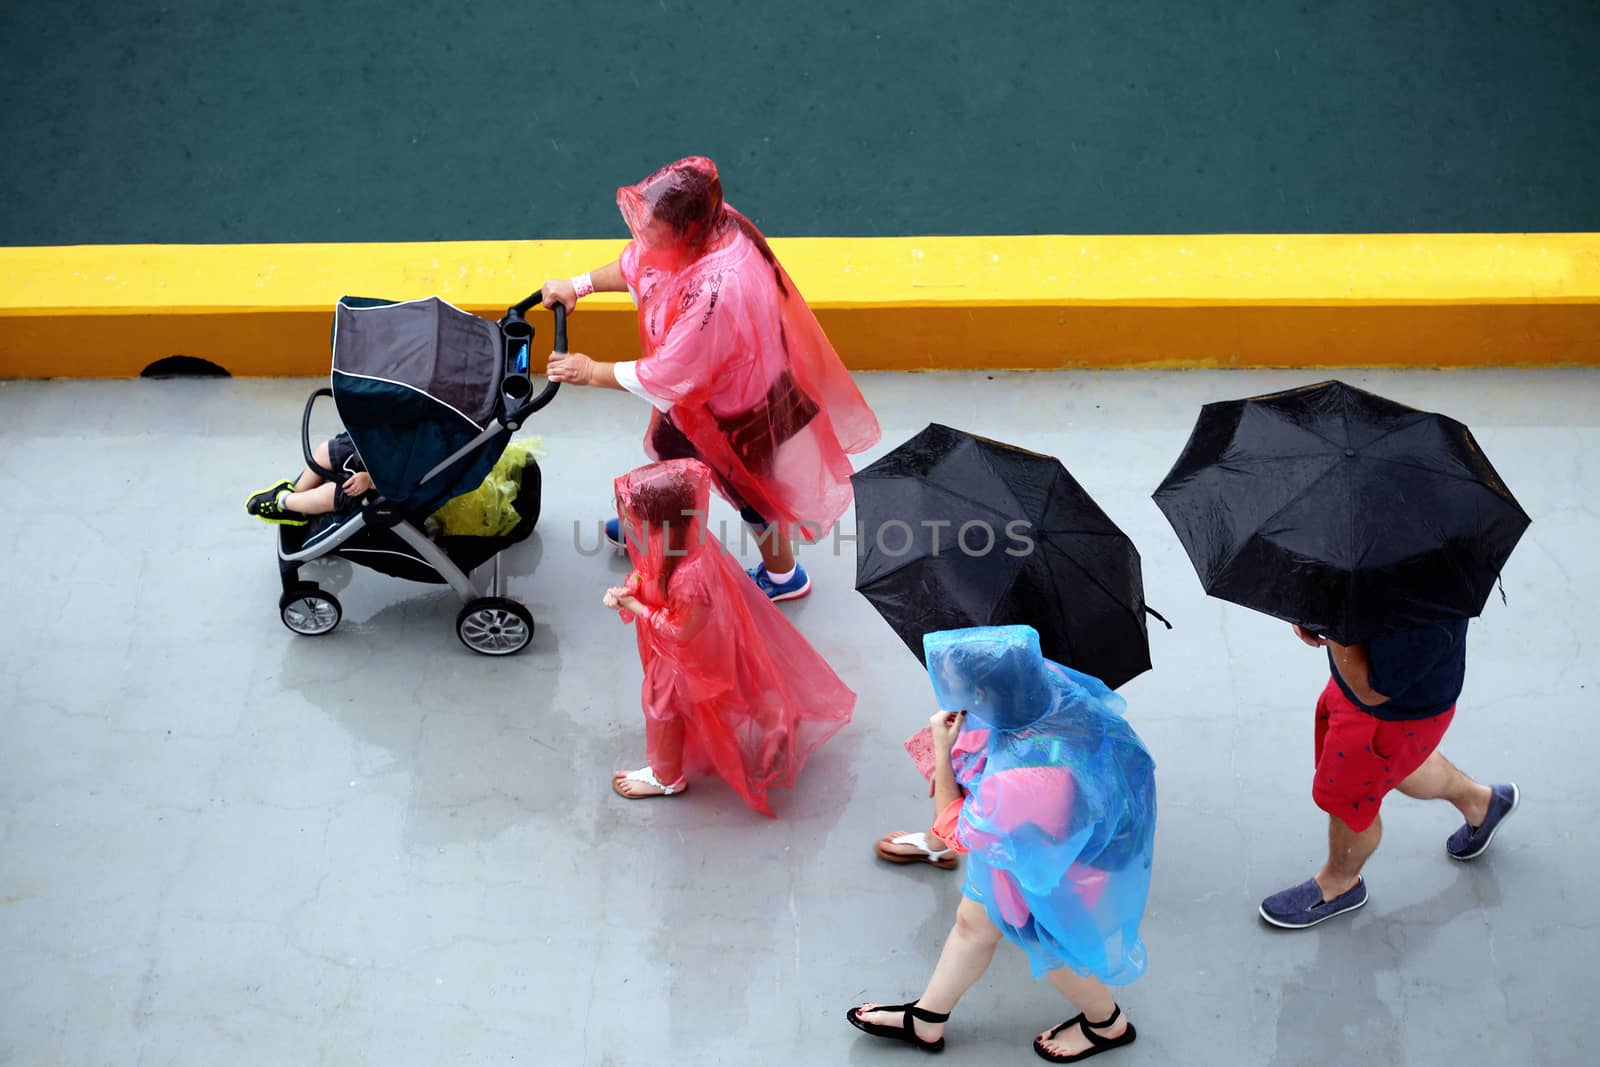 Walking under rain by GSPhotography